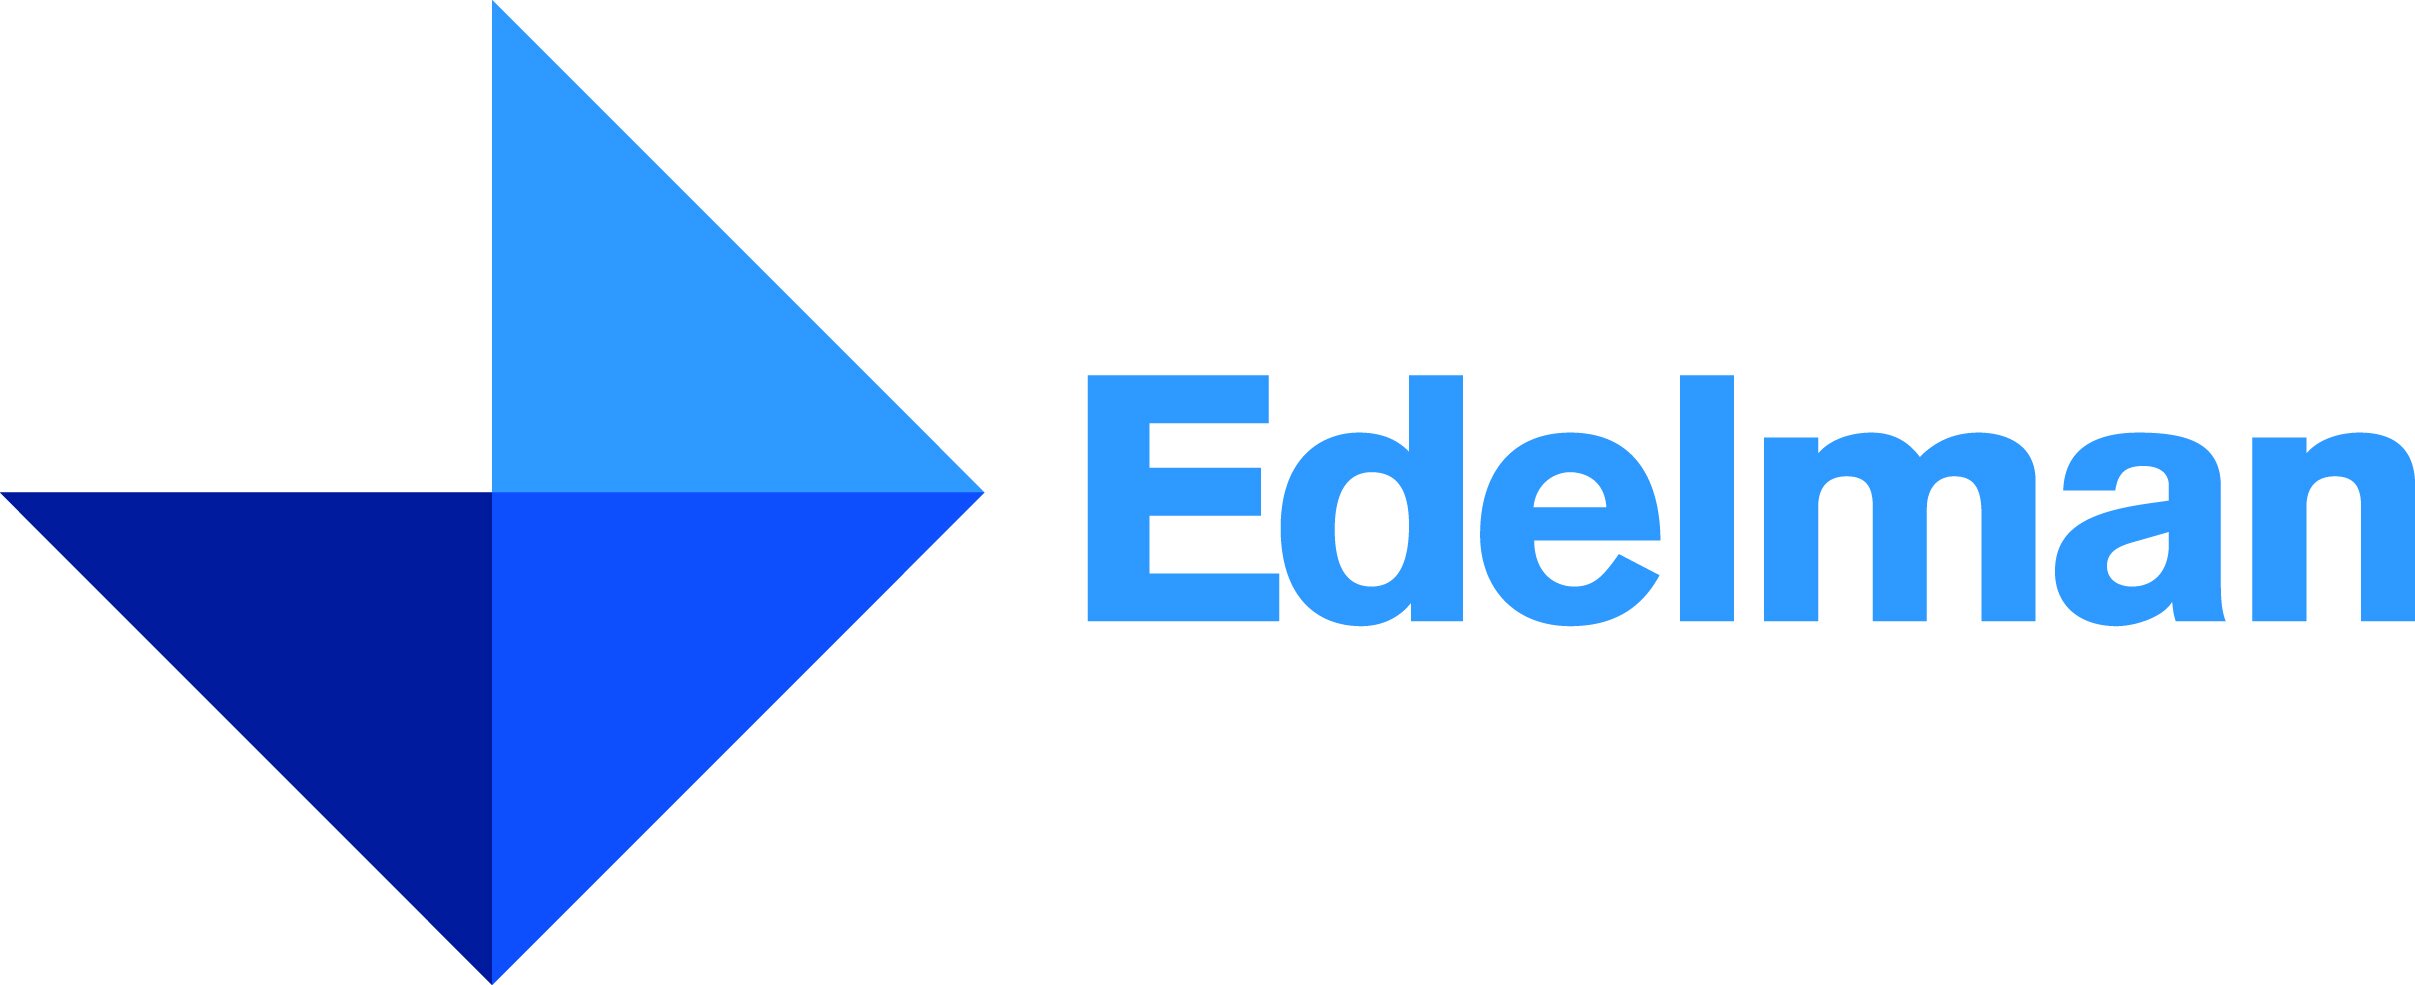 Large Edelman logo.jpeg